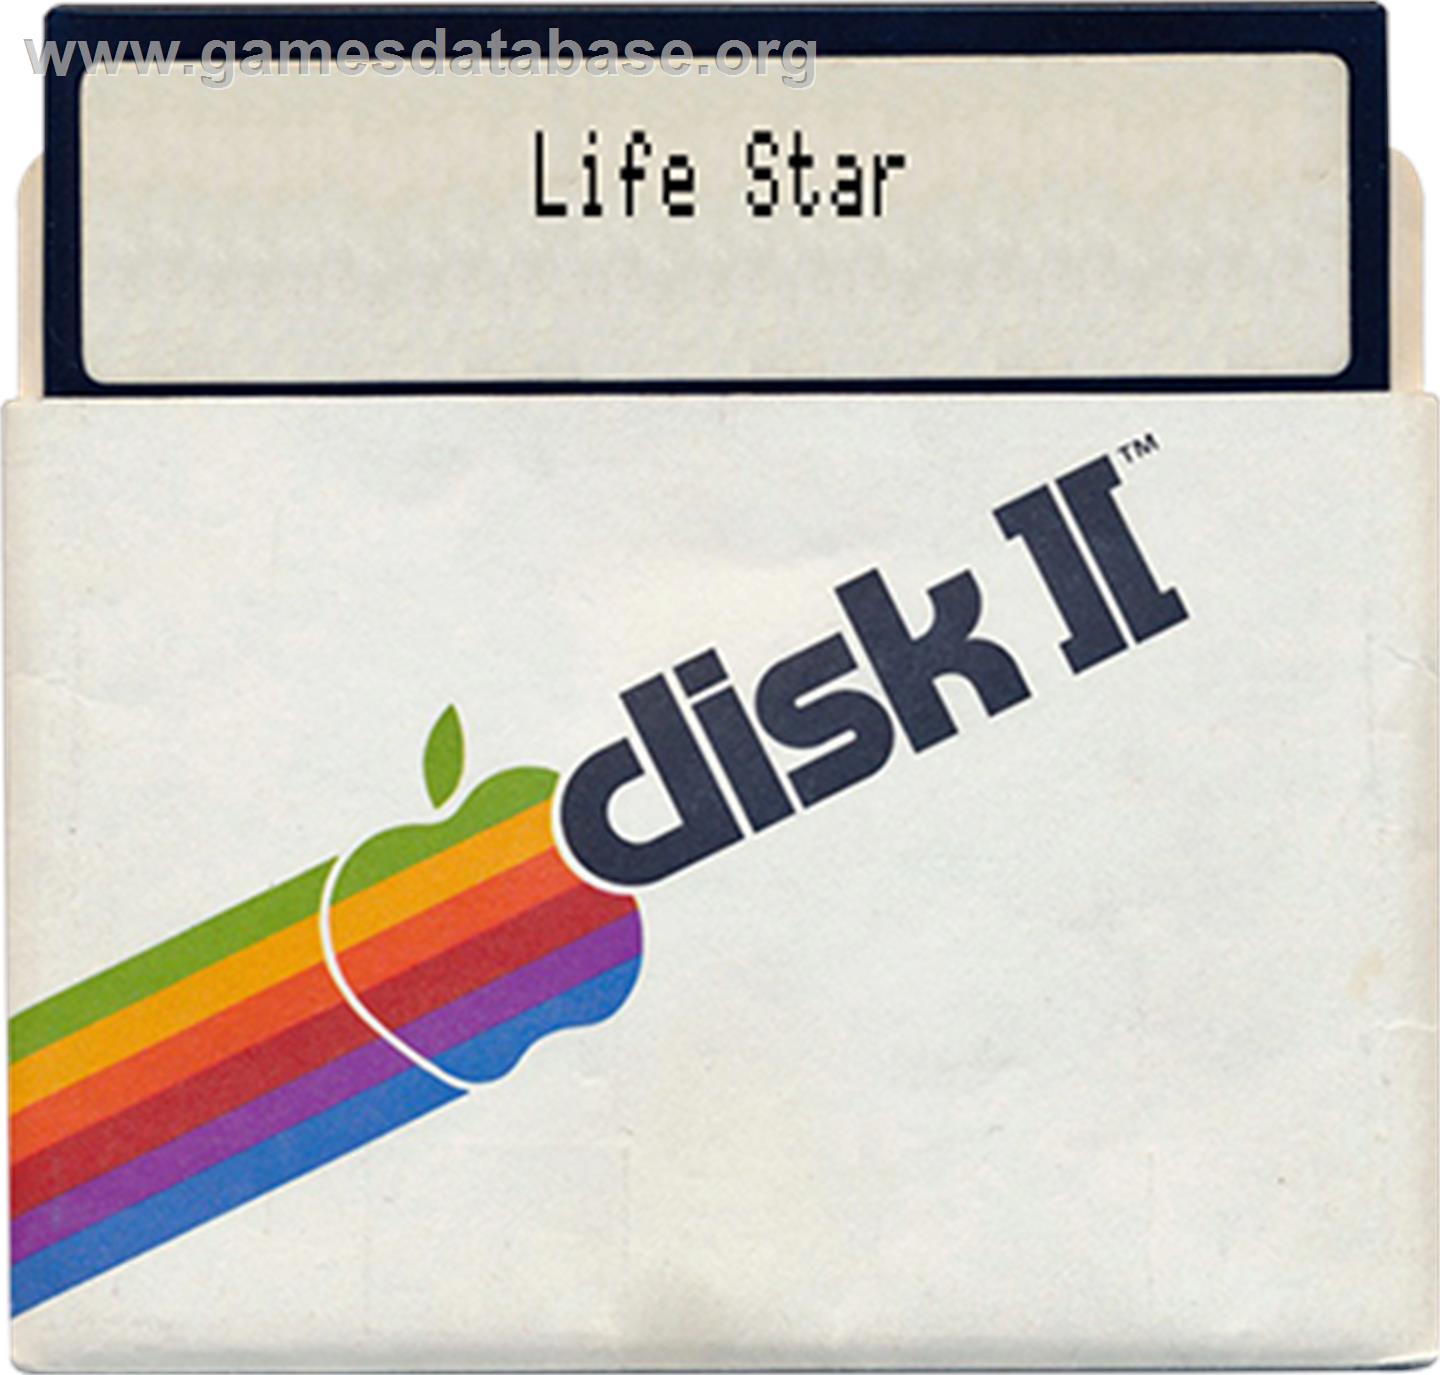 Mine Shaft - Apple II - Artwork - Disc